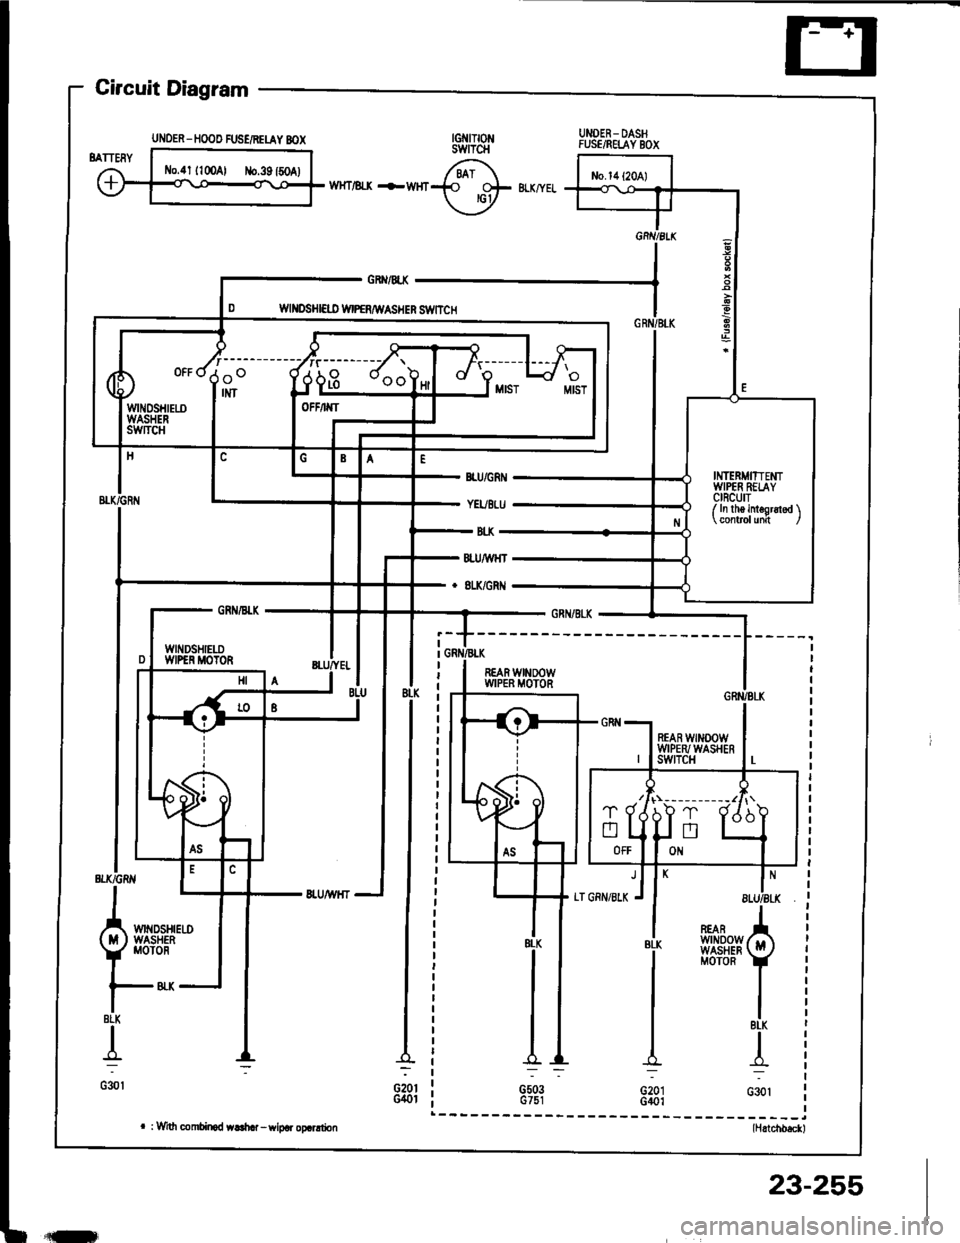 HONDA INTEGRA 1994 4.G Owners Manual Circuit Diagram
UNOER- DASHFUSE/RELAY BOX
WHT/ll-X -FWHr
GRX/4X
WII{DSHI€ID WIPERAIVASHER S1VITCH
REAR WINOOWWIPER MOTOR
BLK
{
G30l
REARwtN00wWASHERMOTOR
BLK
G20IG401
l*_(ittwA!
Y 
Mor
|-8LK
I
G30l